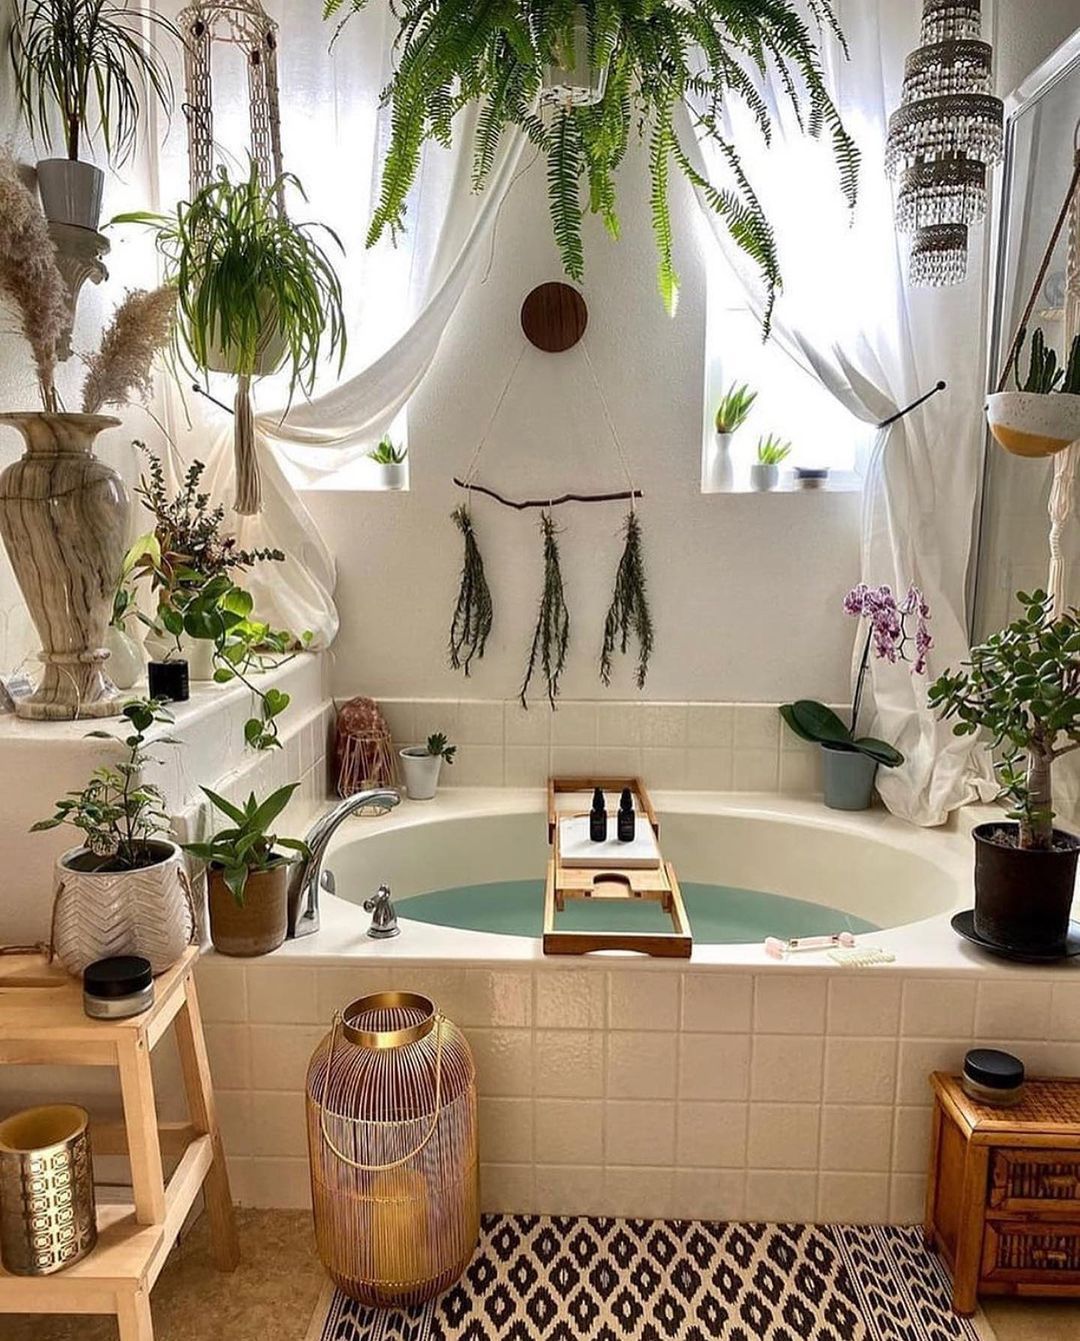 tropical-bamboo-decor-in-the-bathroom-via-_biodara.jpg